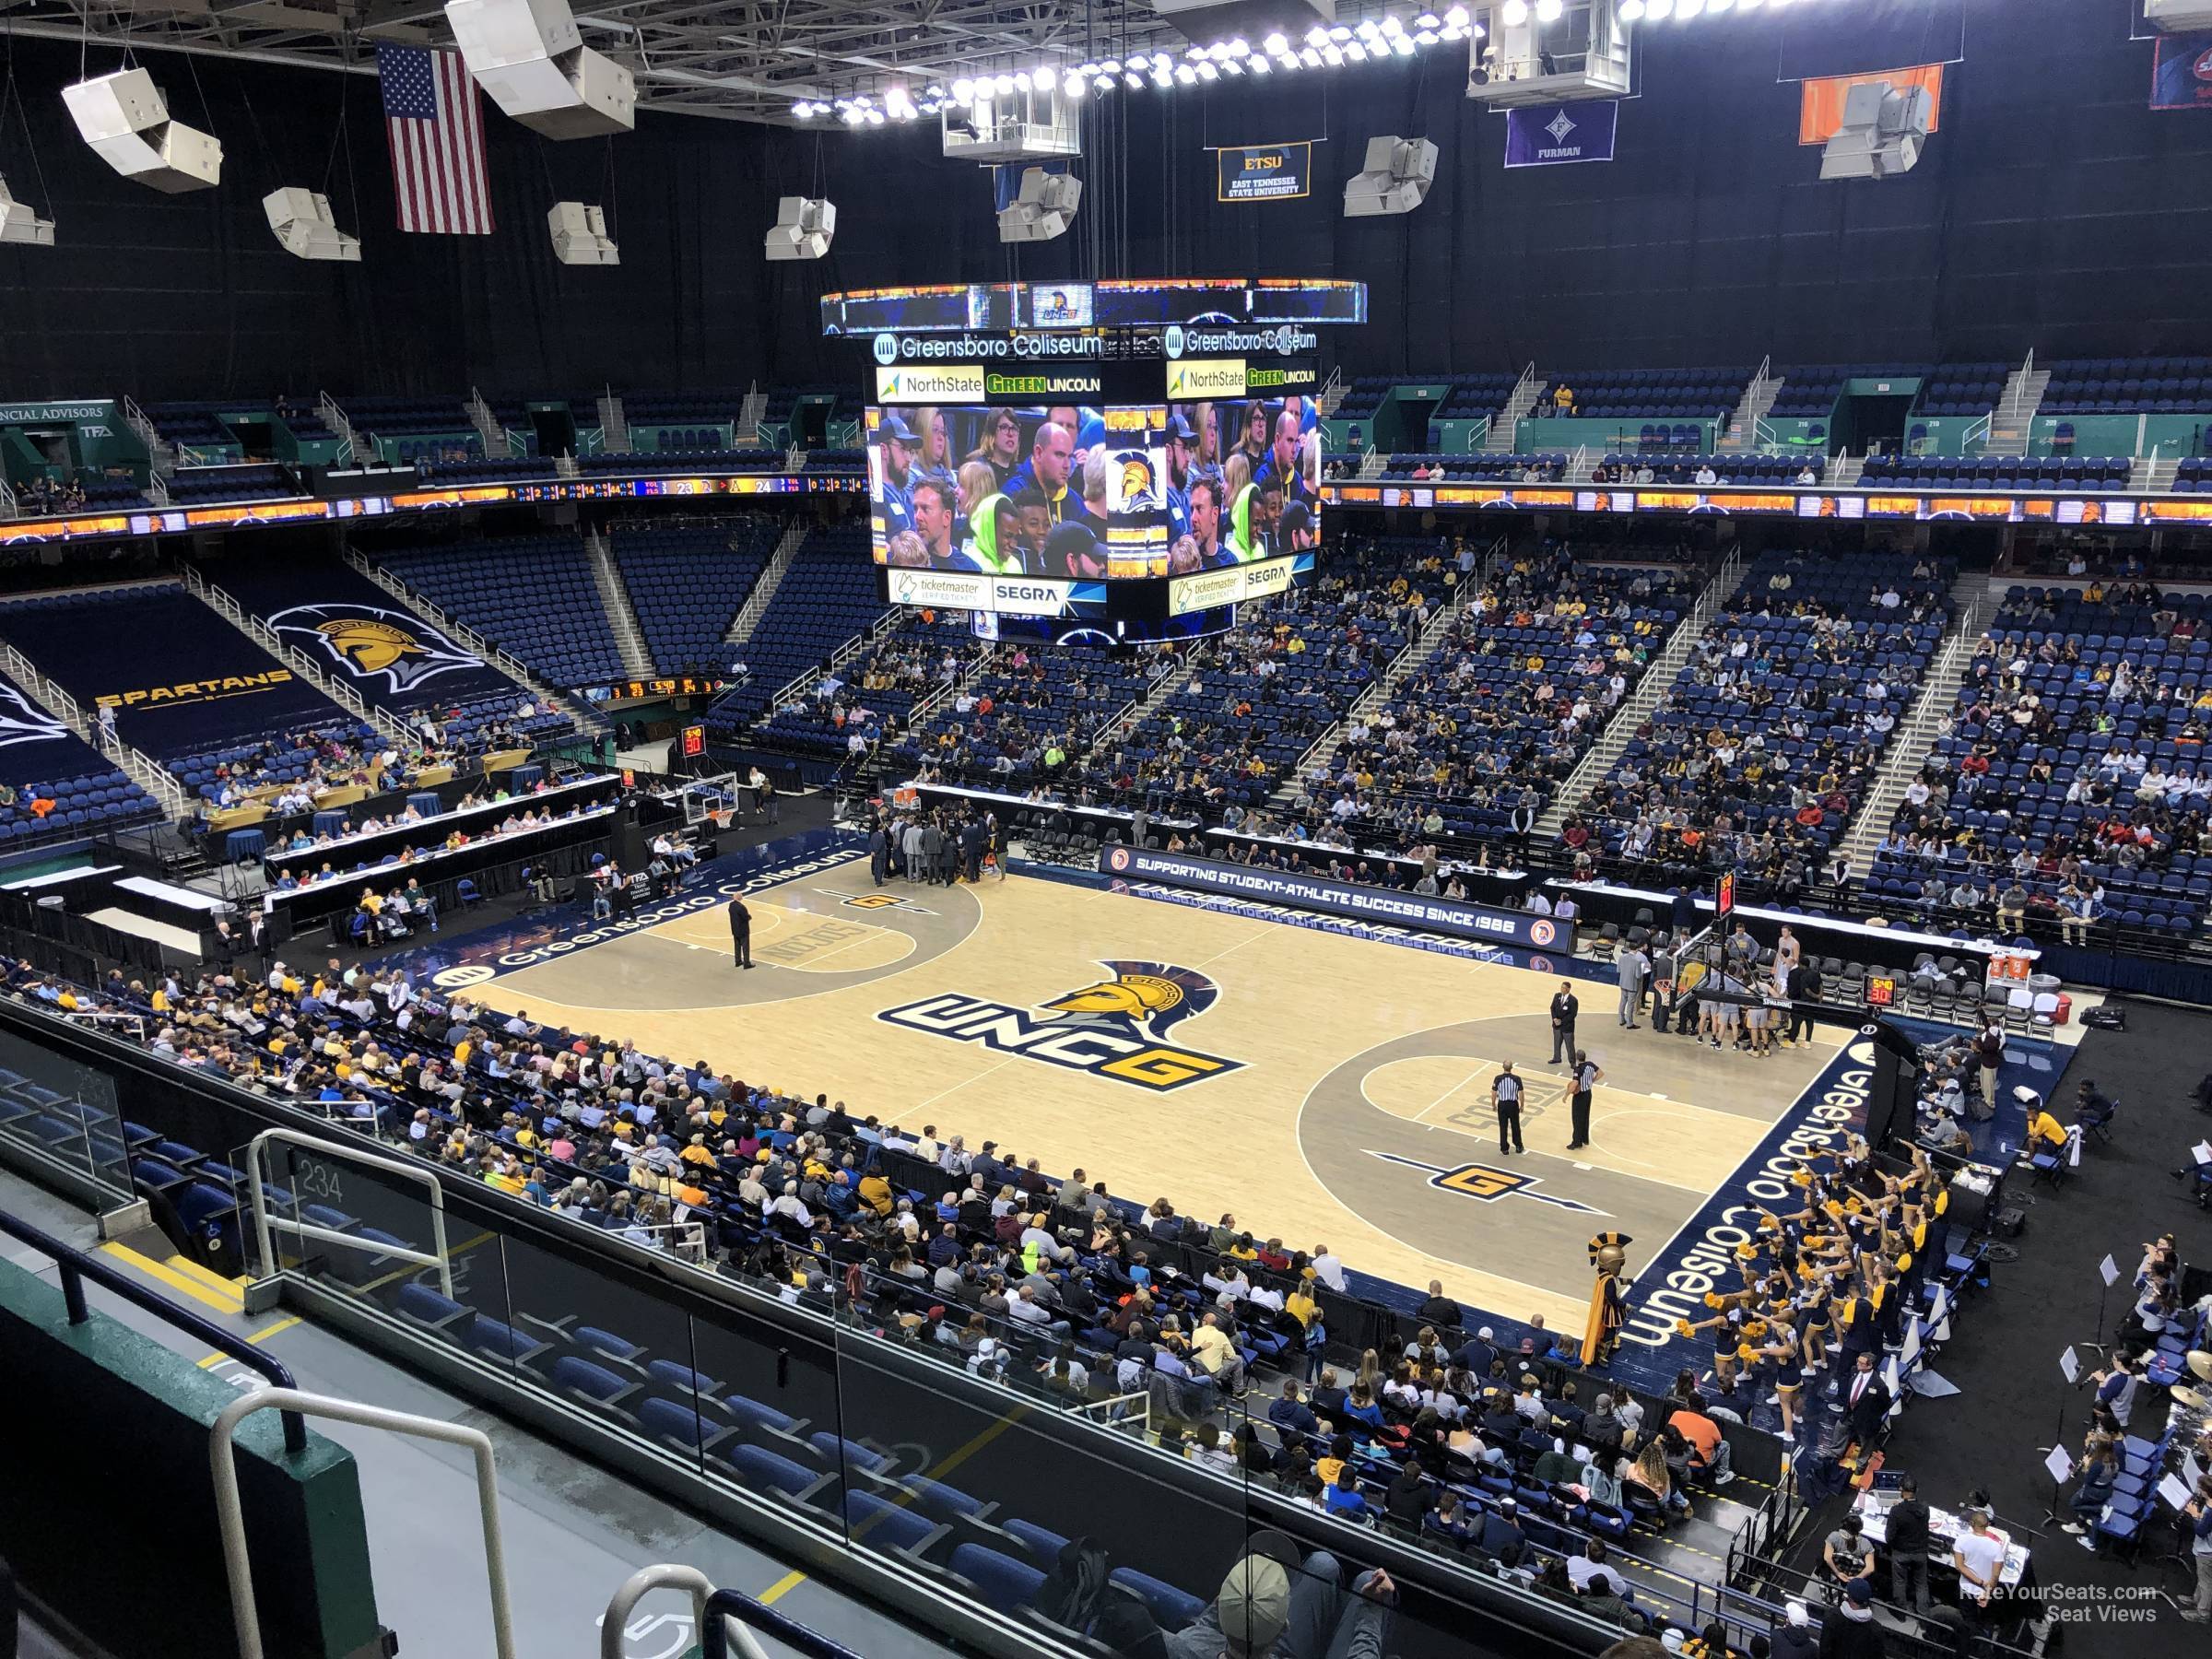 Section 234 at Greensboro Coliseum UNC Greensboro Basketball